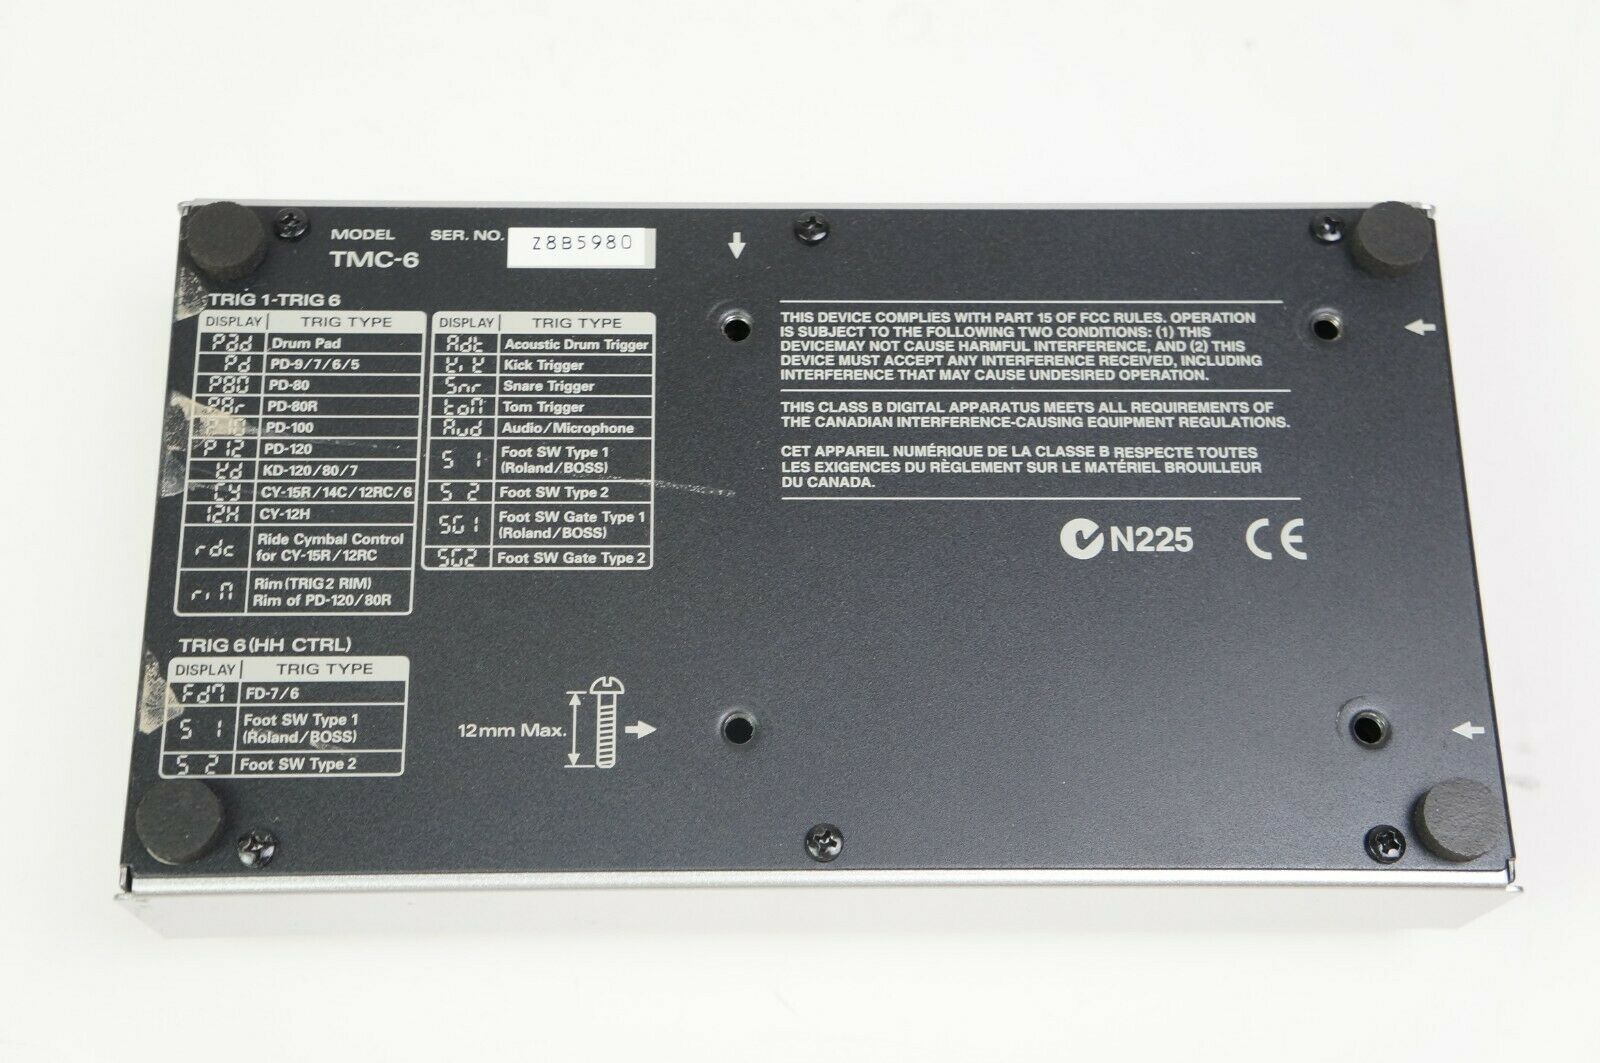 MATRIXSYNTH: Roland TMC-6 Trigger MIDI Converter SN Z885980